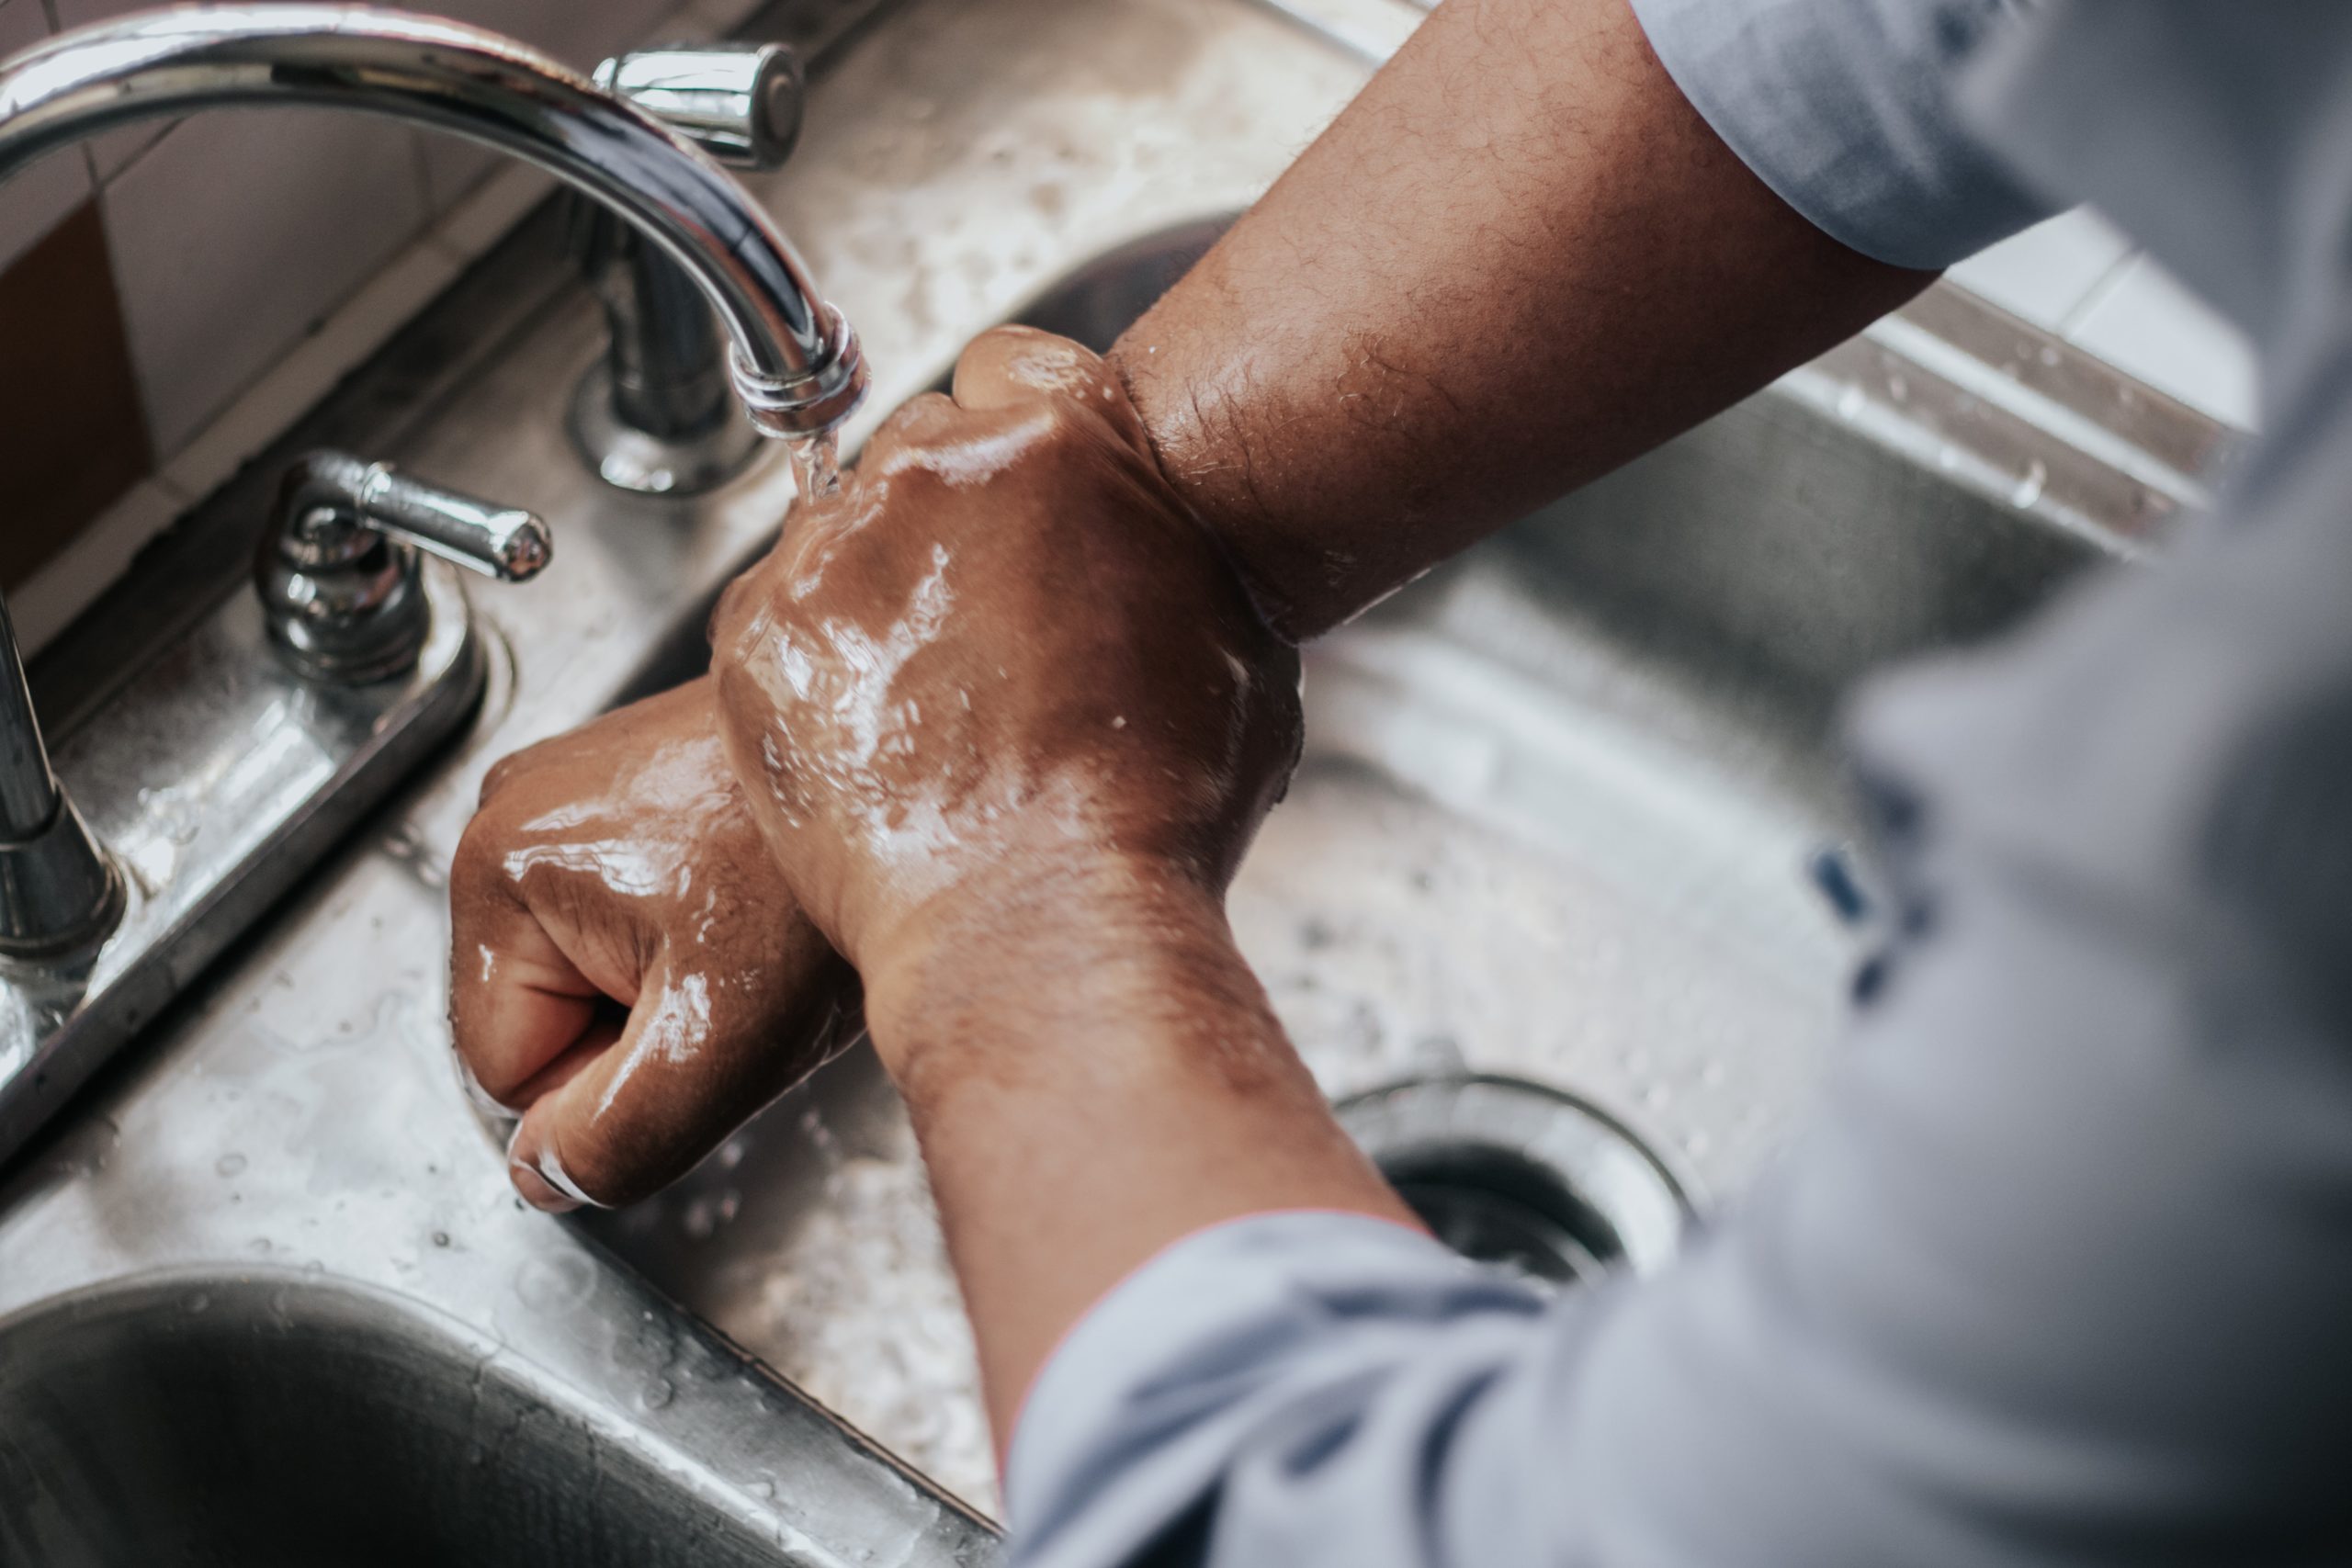 Washing hands/ hygiene poverty